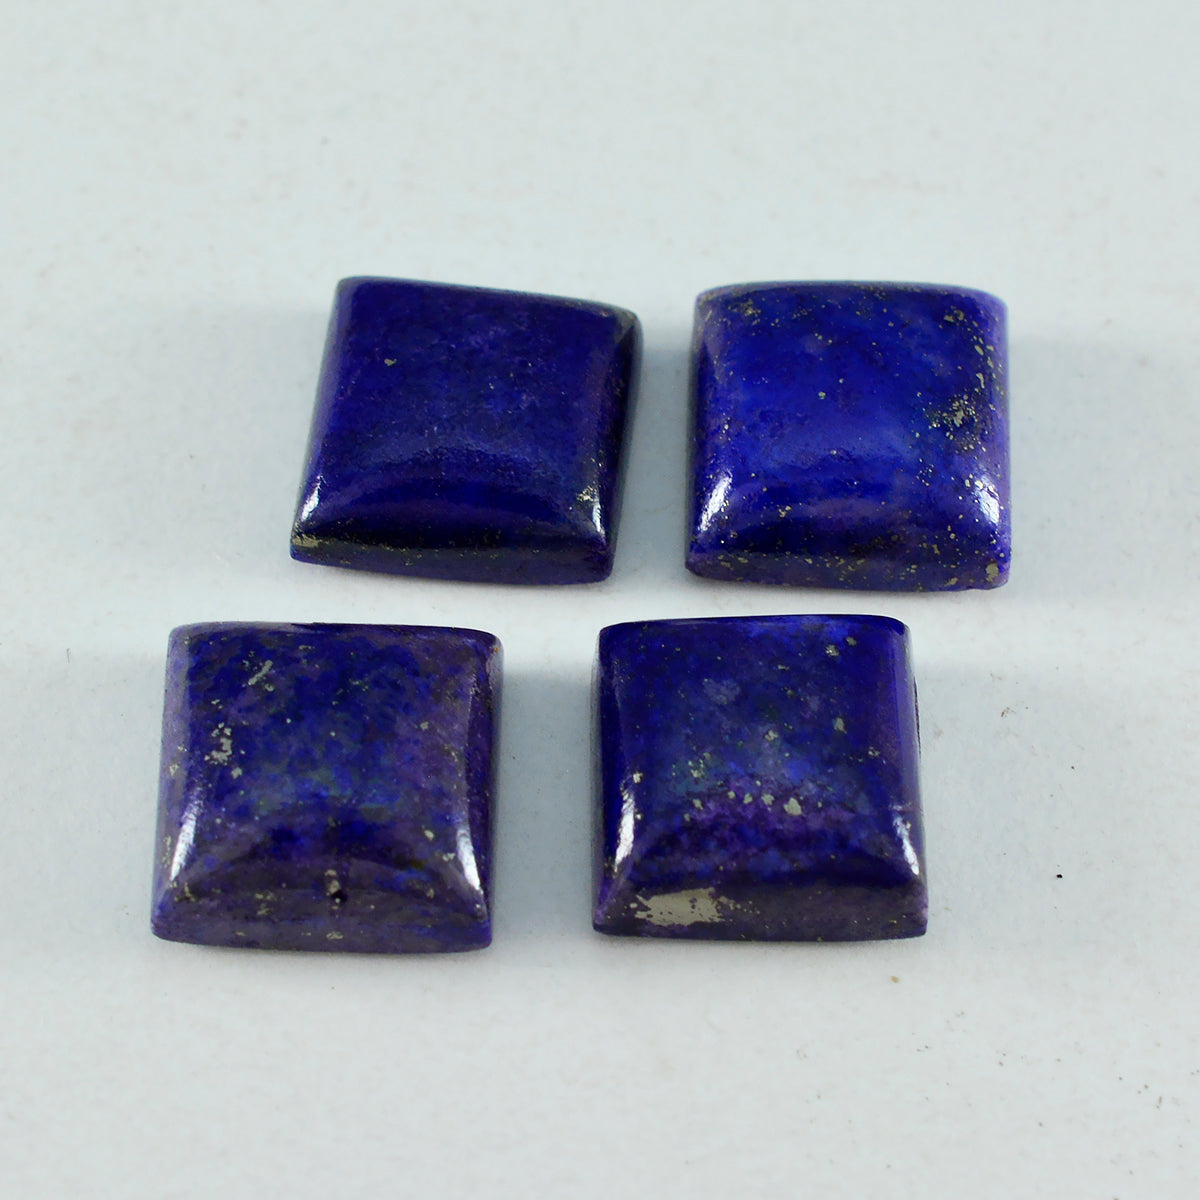 Riyogems 1PC Blue Lapis Lazuli Cabochon 15x15 mm Square Shape A1 Quality Stone